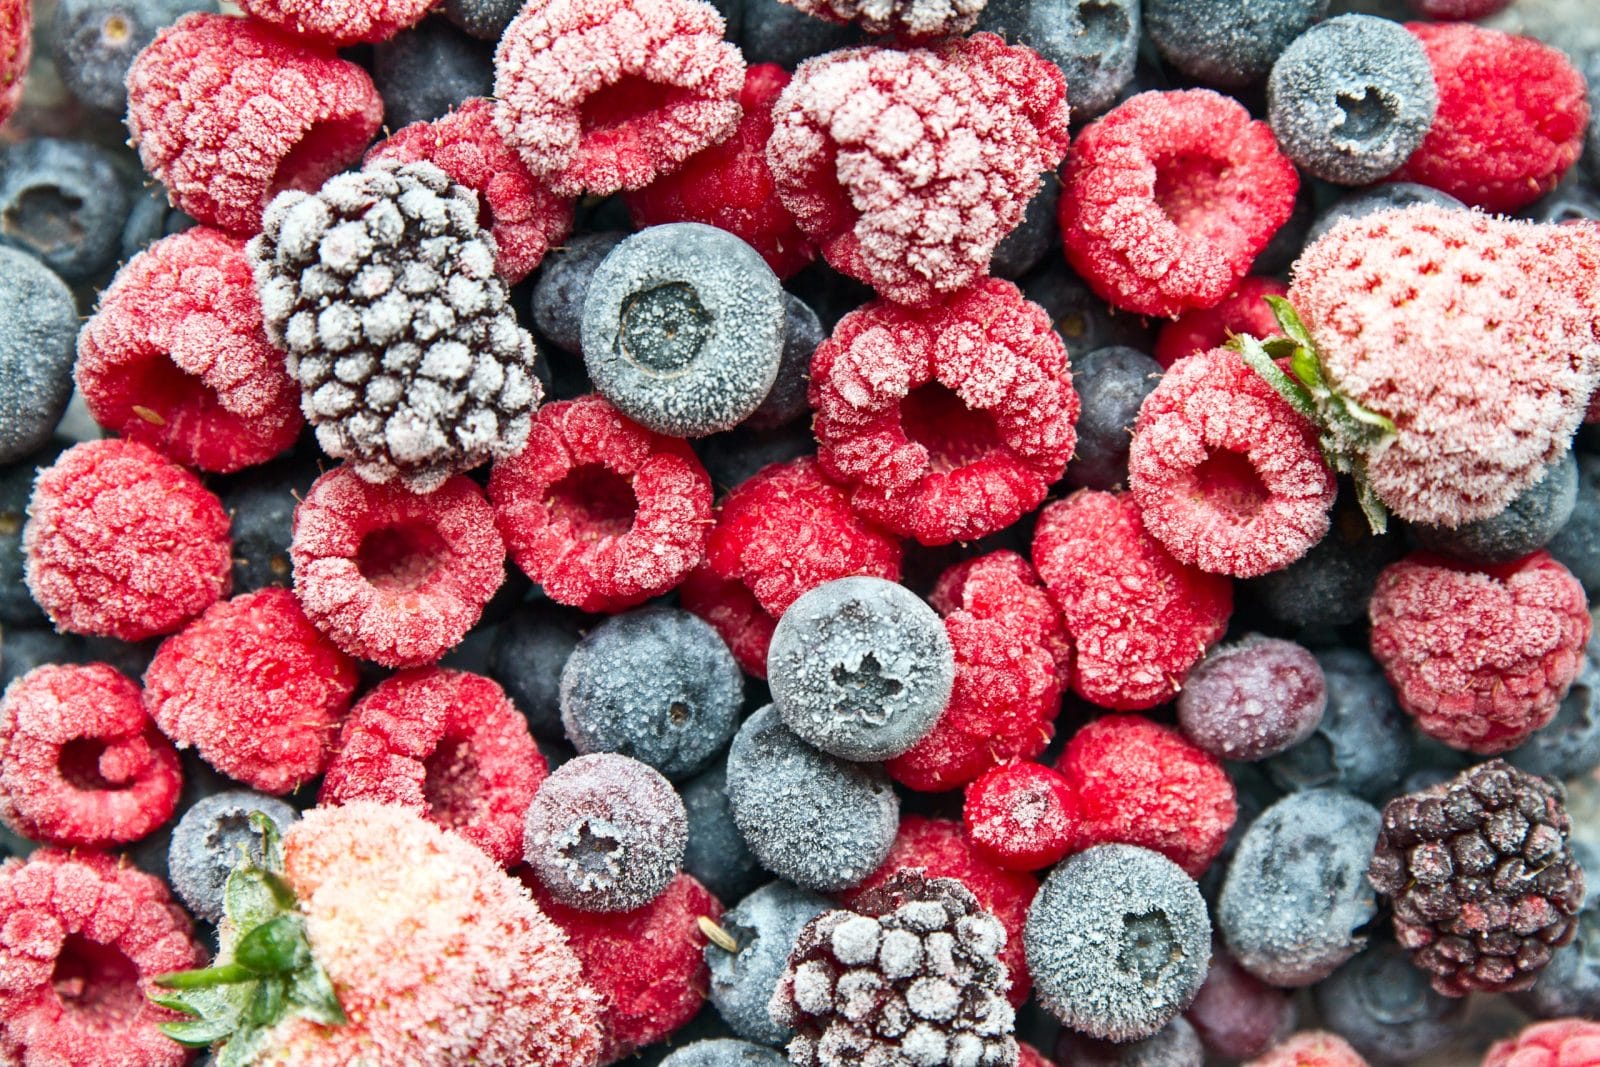 Frozen berries of all kinds